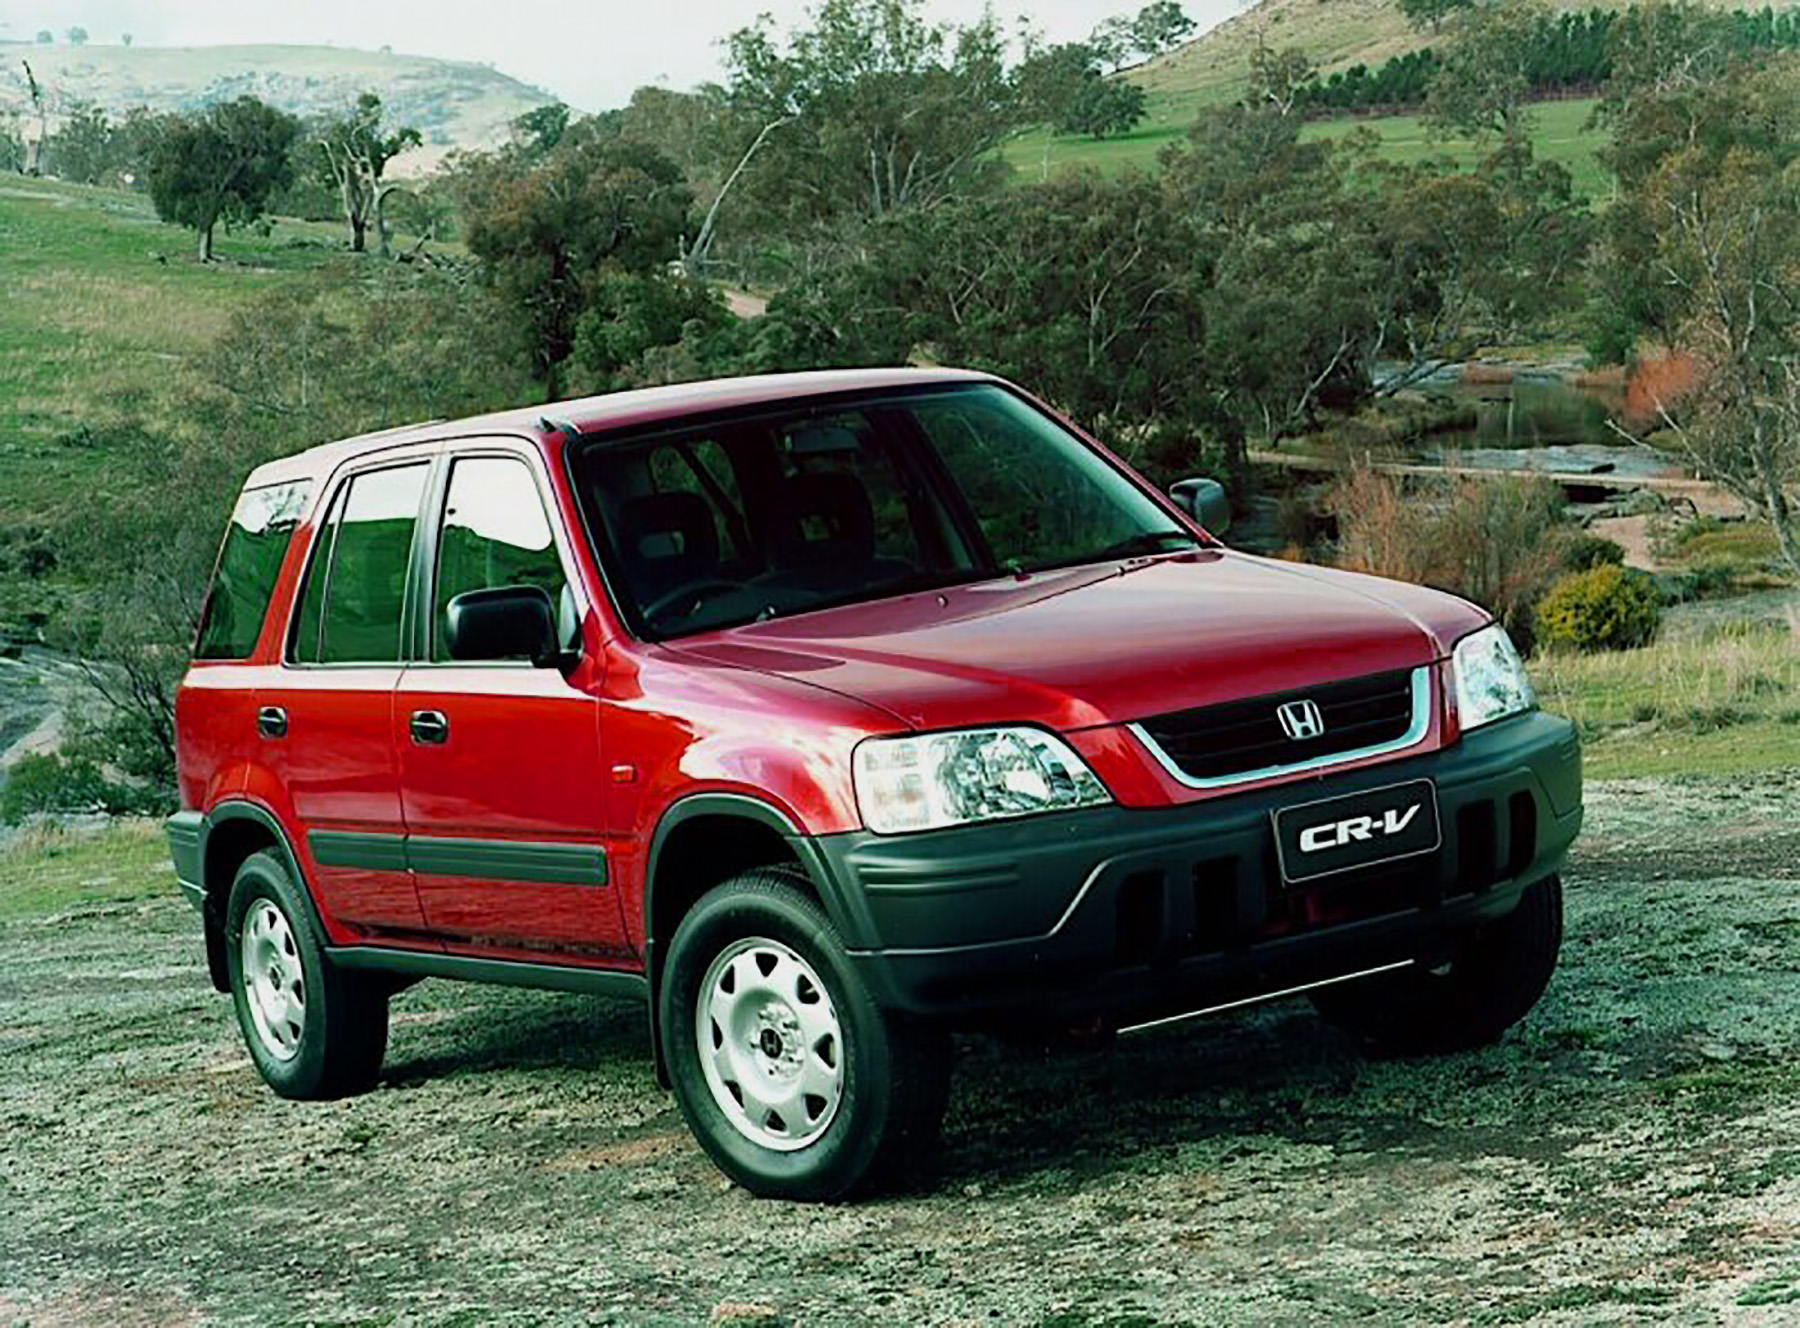 Хонда црв 2001 год. Honda CRV 1997. Honda CRV rd1. Honda CR-V rd1 1997. Honda CRV 1.